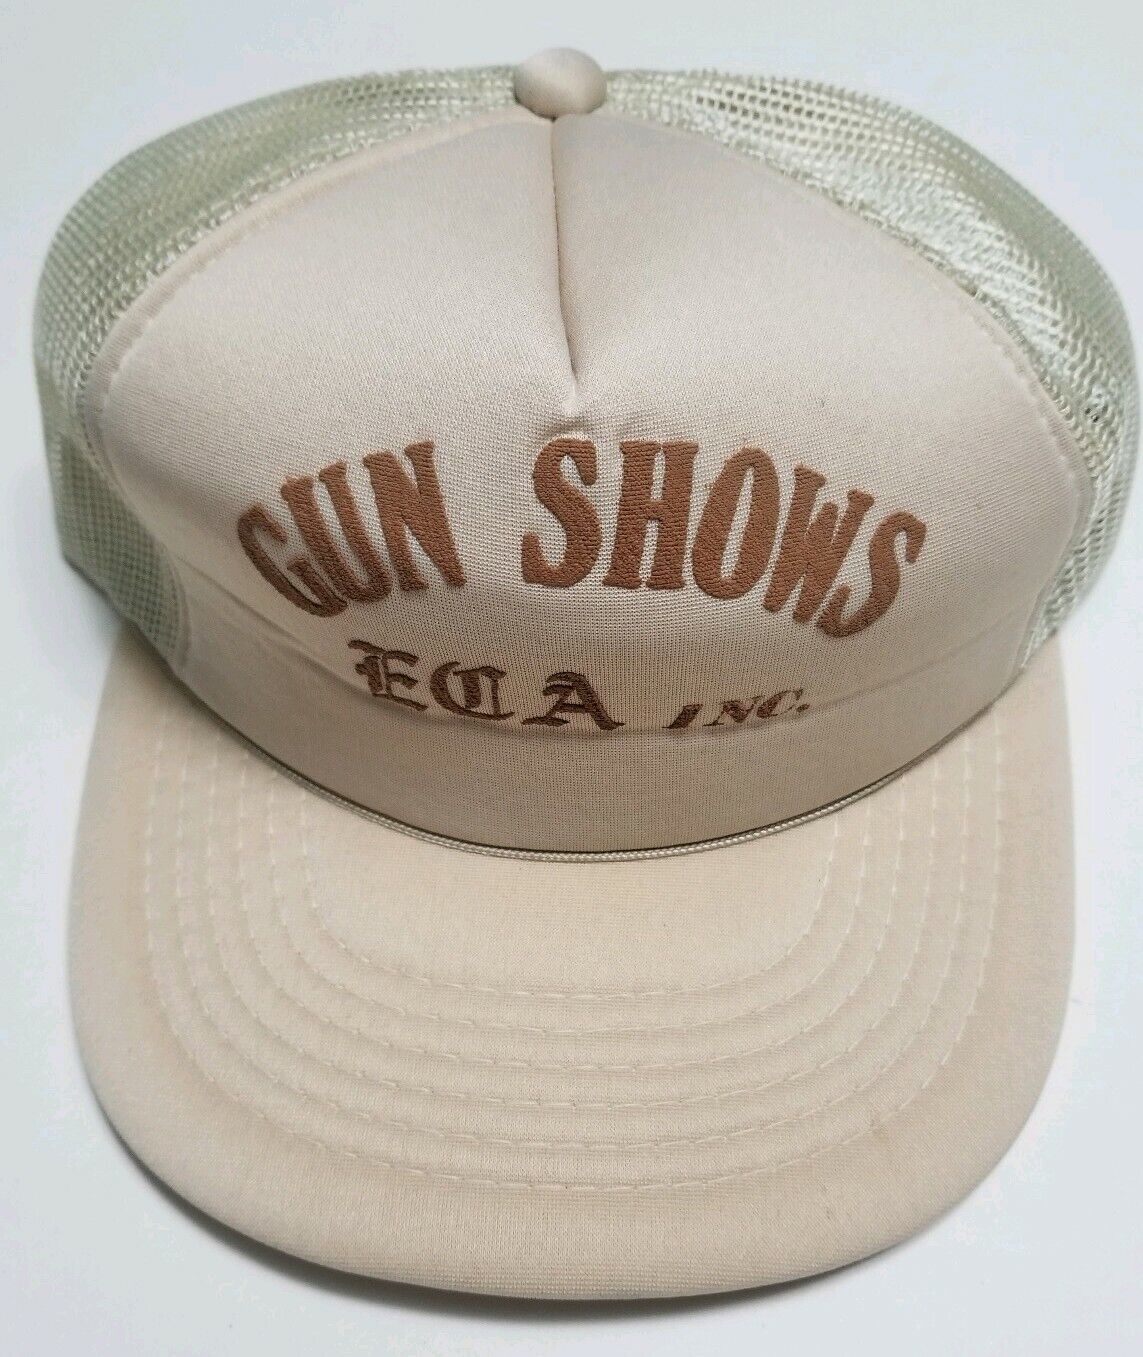 Gun Rights Trucker Hat - New Men's Meshback Foam Vintage Cap - Comfortable Fit